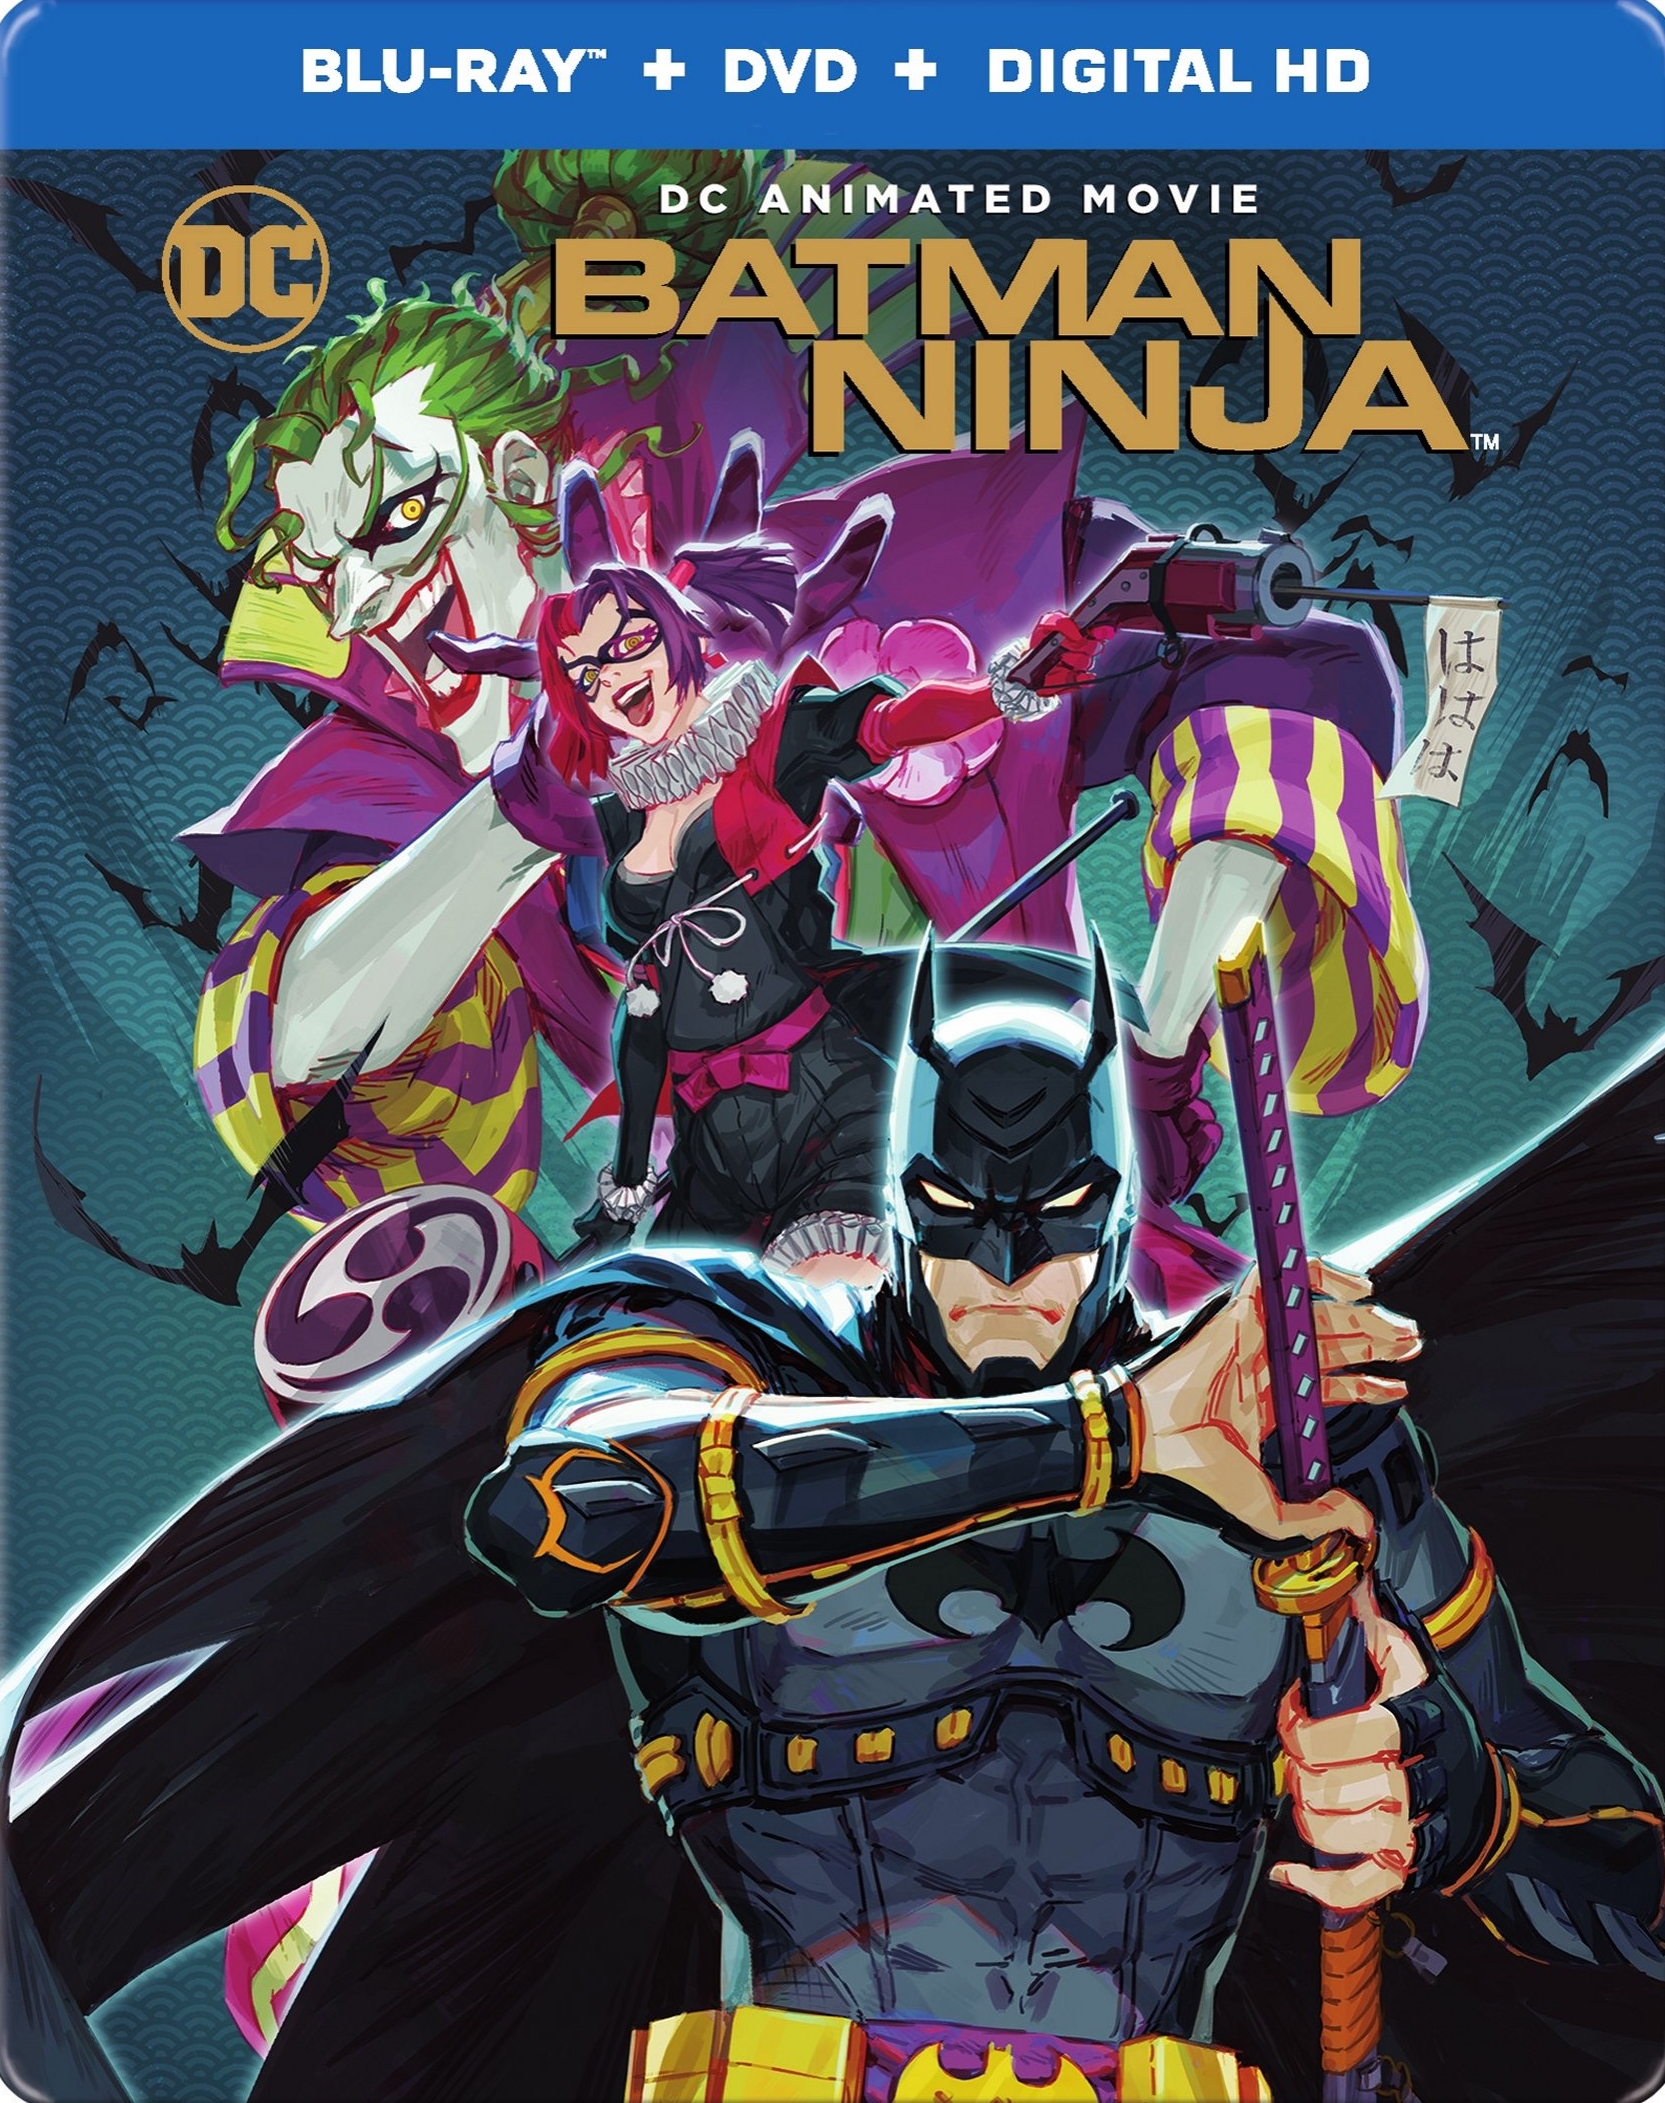 Batman Ninja [SteelBook] [Includes Digital Copy] [Blu-ray/DVD] [2018] -  Best Buy